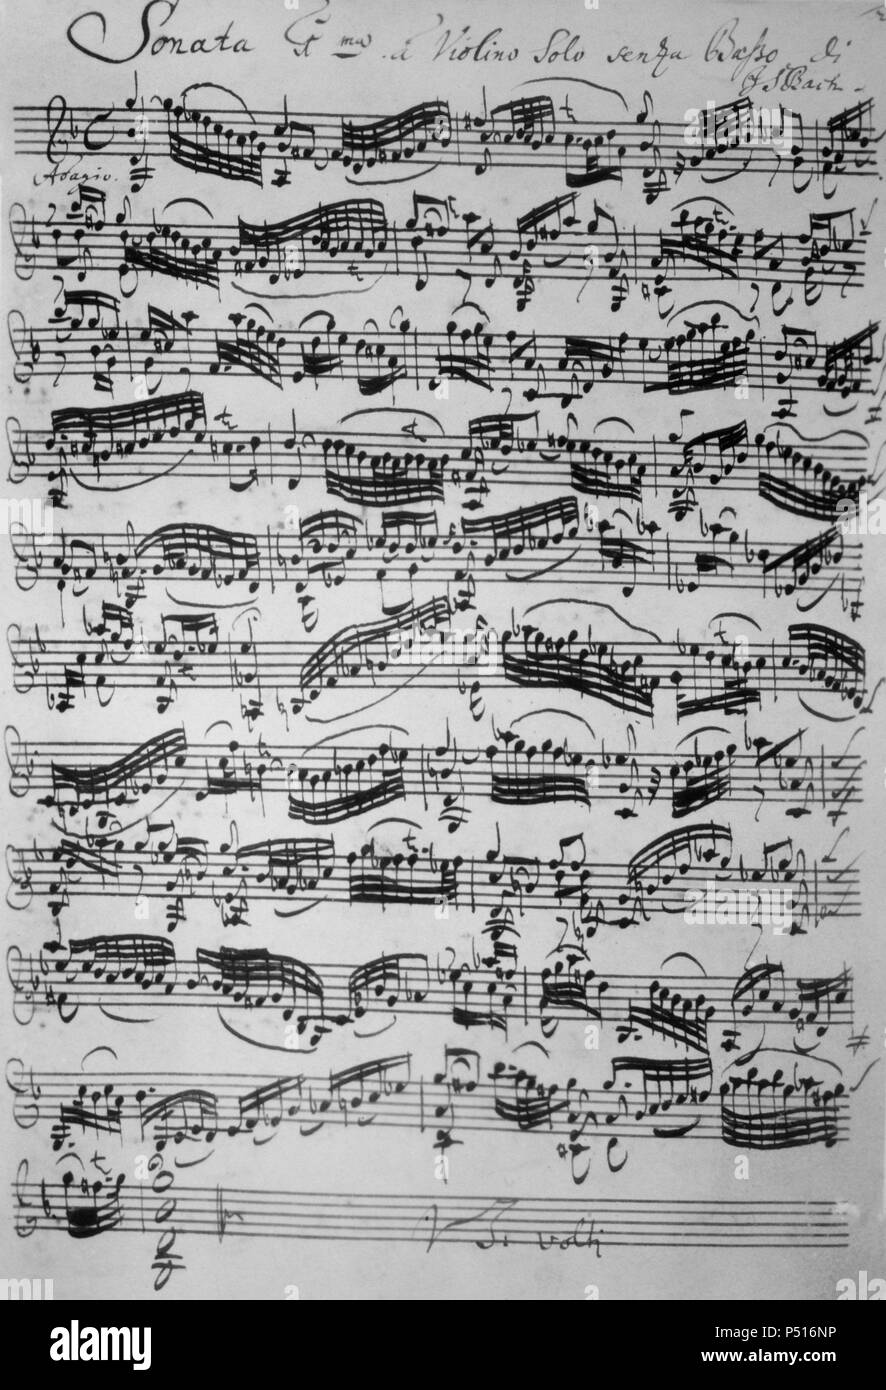 Johann sebastian bach violin hi-res stock photography and images - Alamy